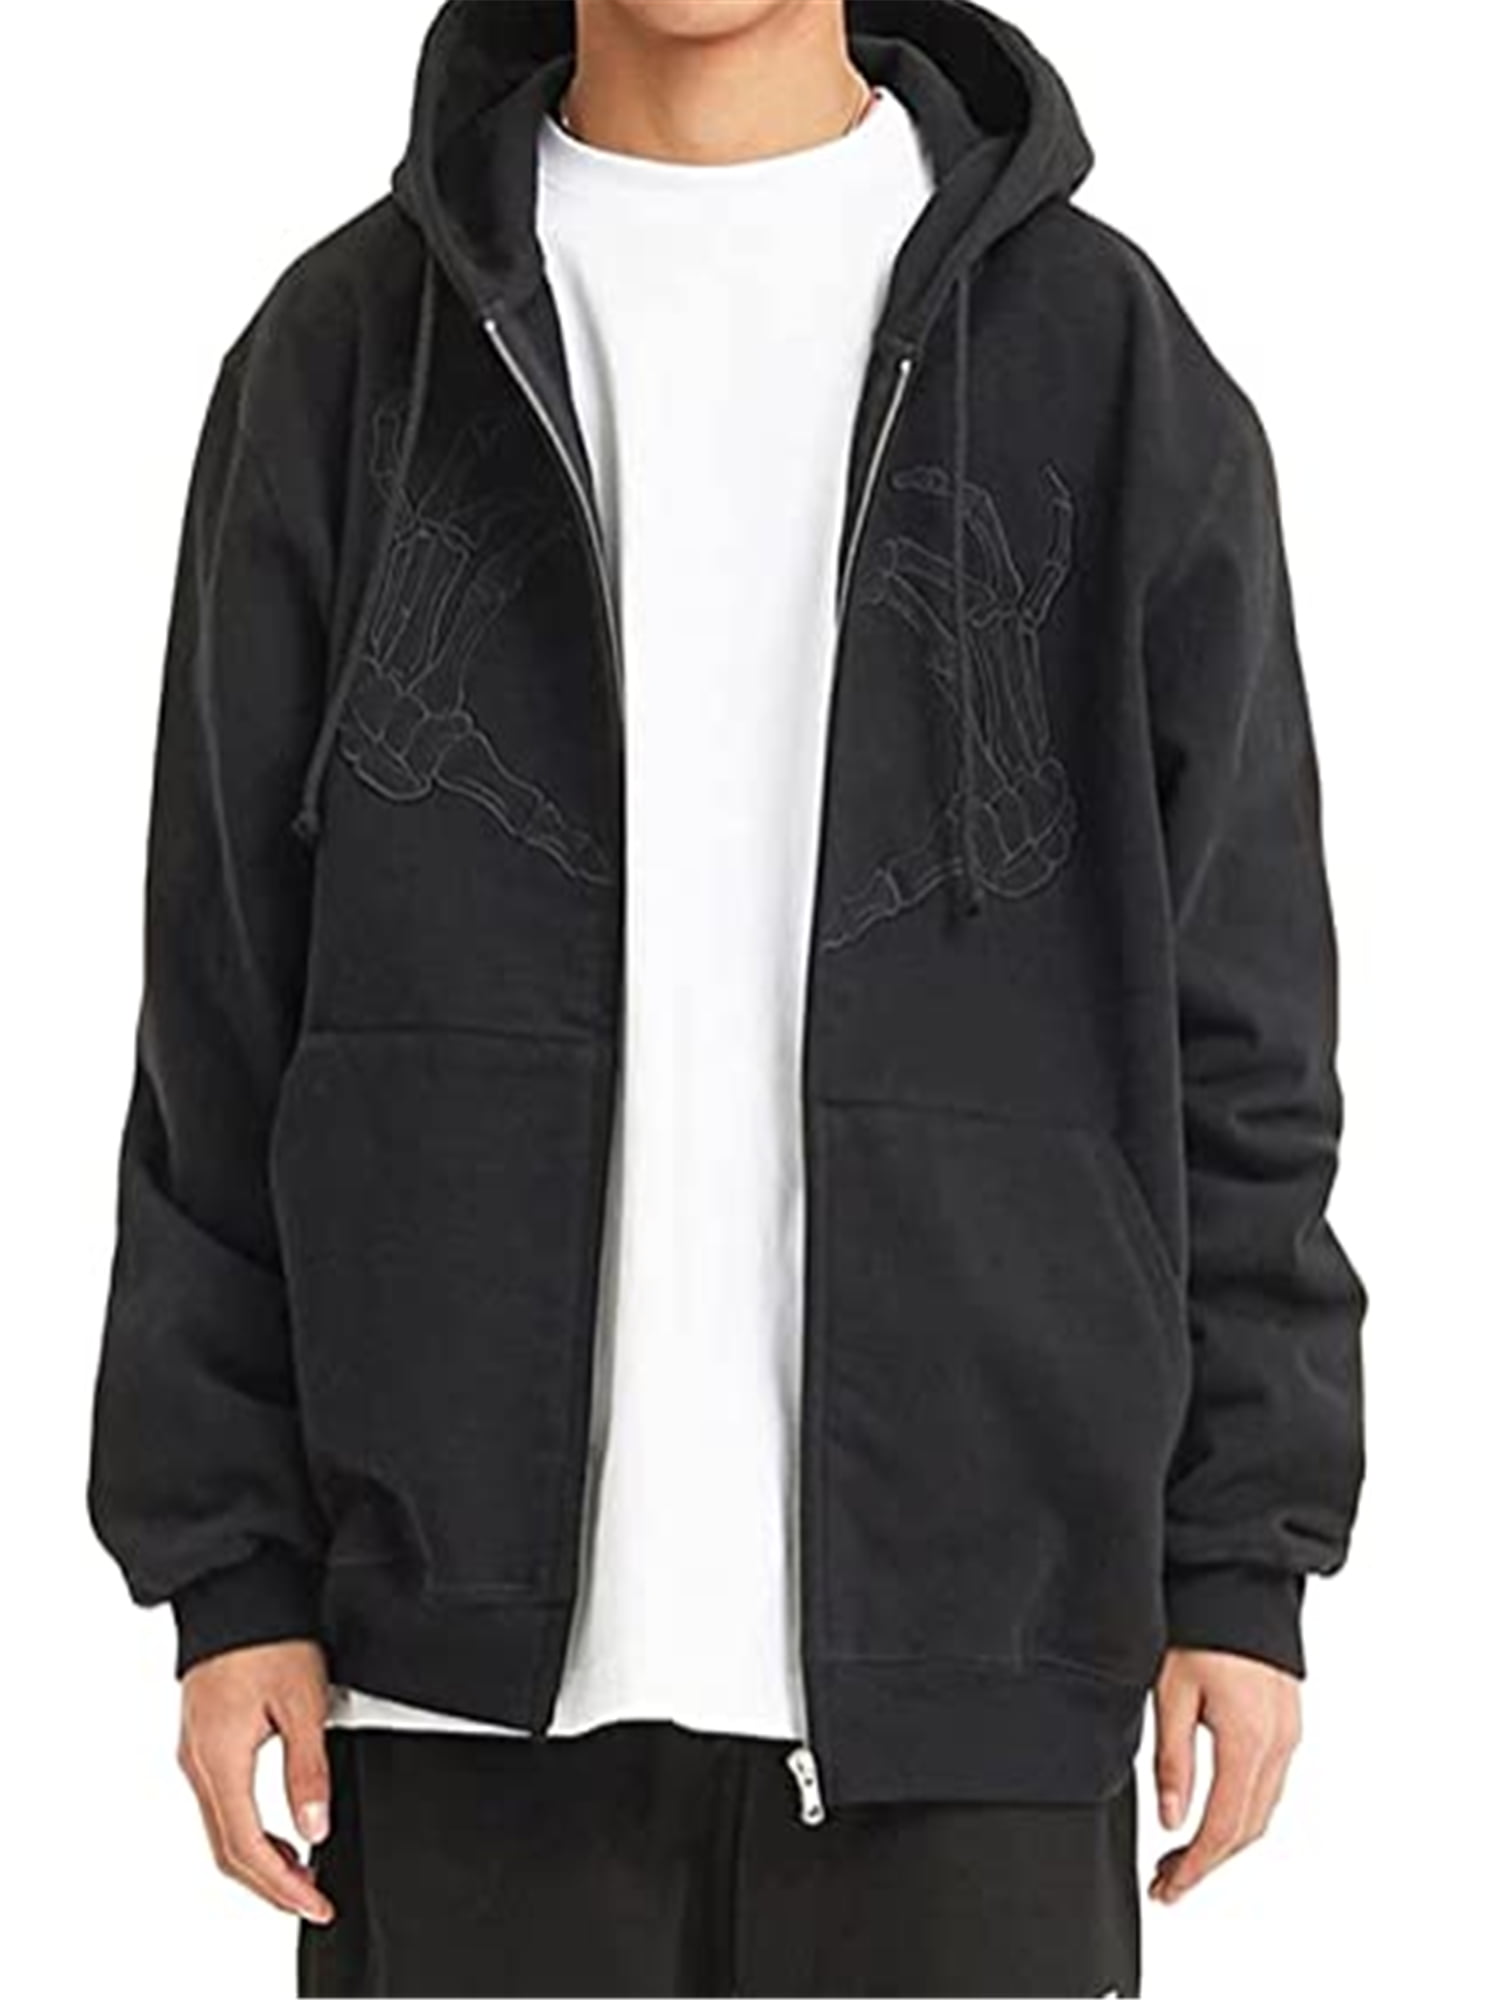 Sunisery Women Zip-Up Hoodie Vintage Graphic Sweatshirts Long Sleeve Coat  E-Girl 90s Clothes Streetwear Jacket